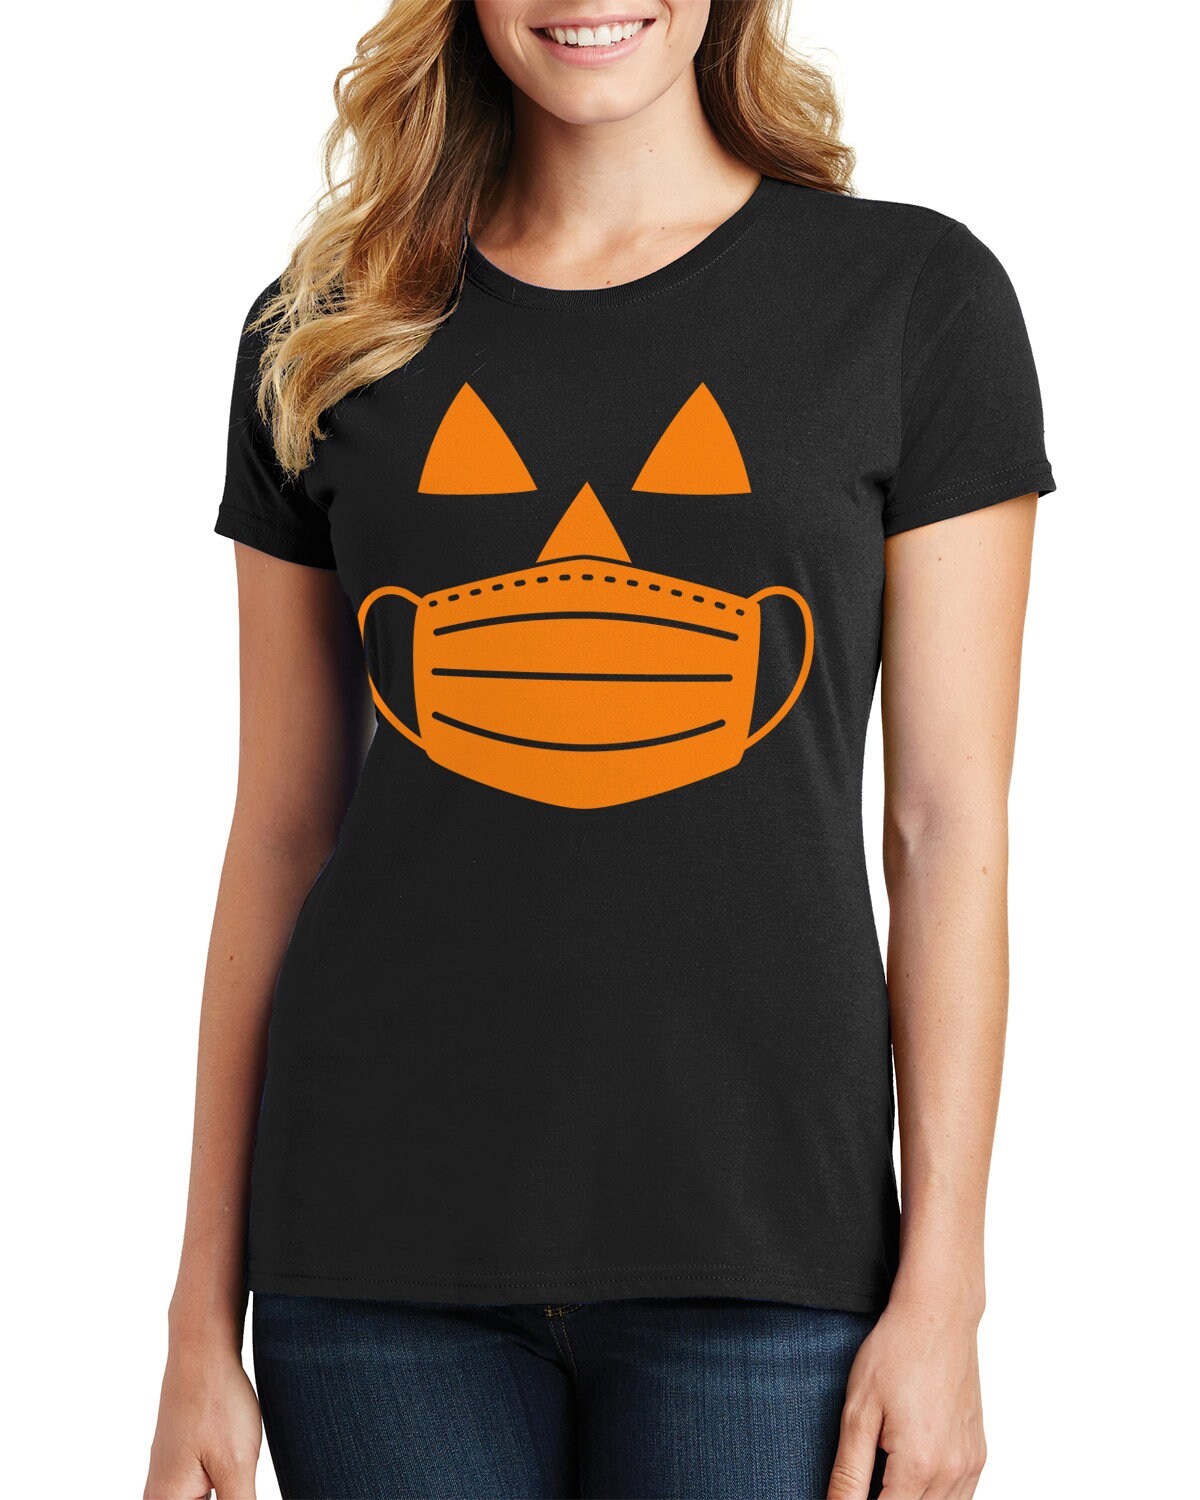 Discover Jack O' Lantern Pumpkin with Mask Halloween Costume - Women's Short Sleeve T-Shirt